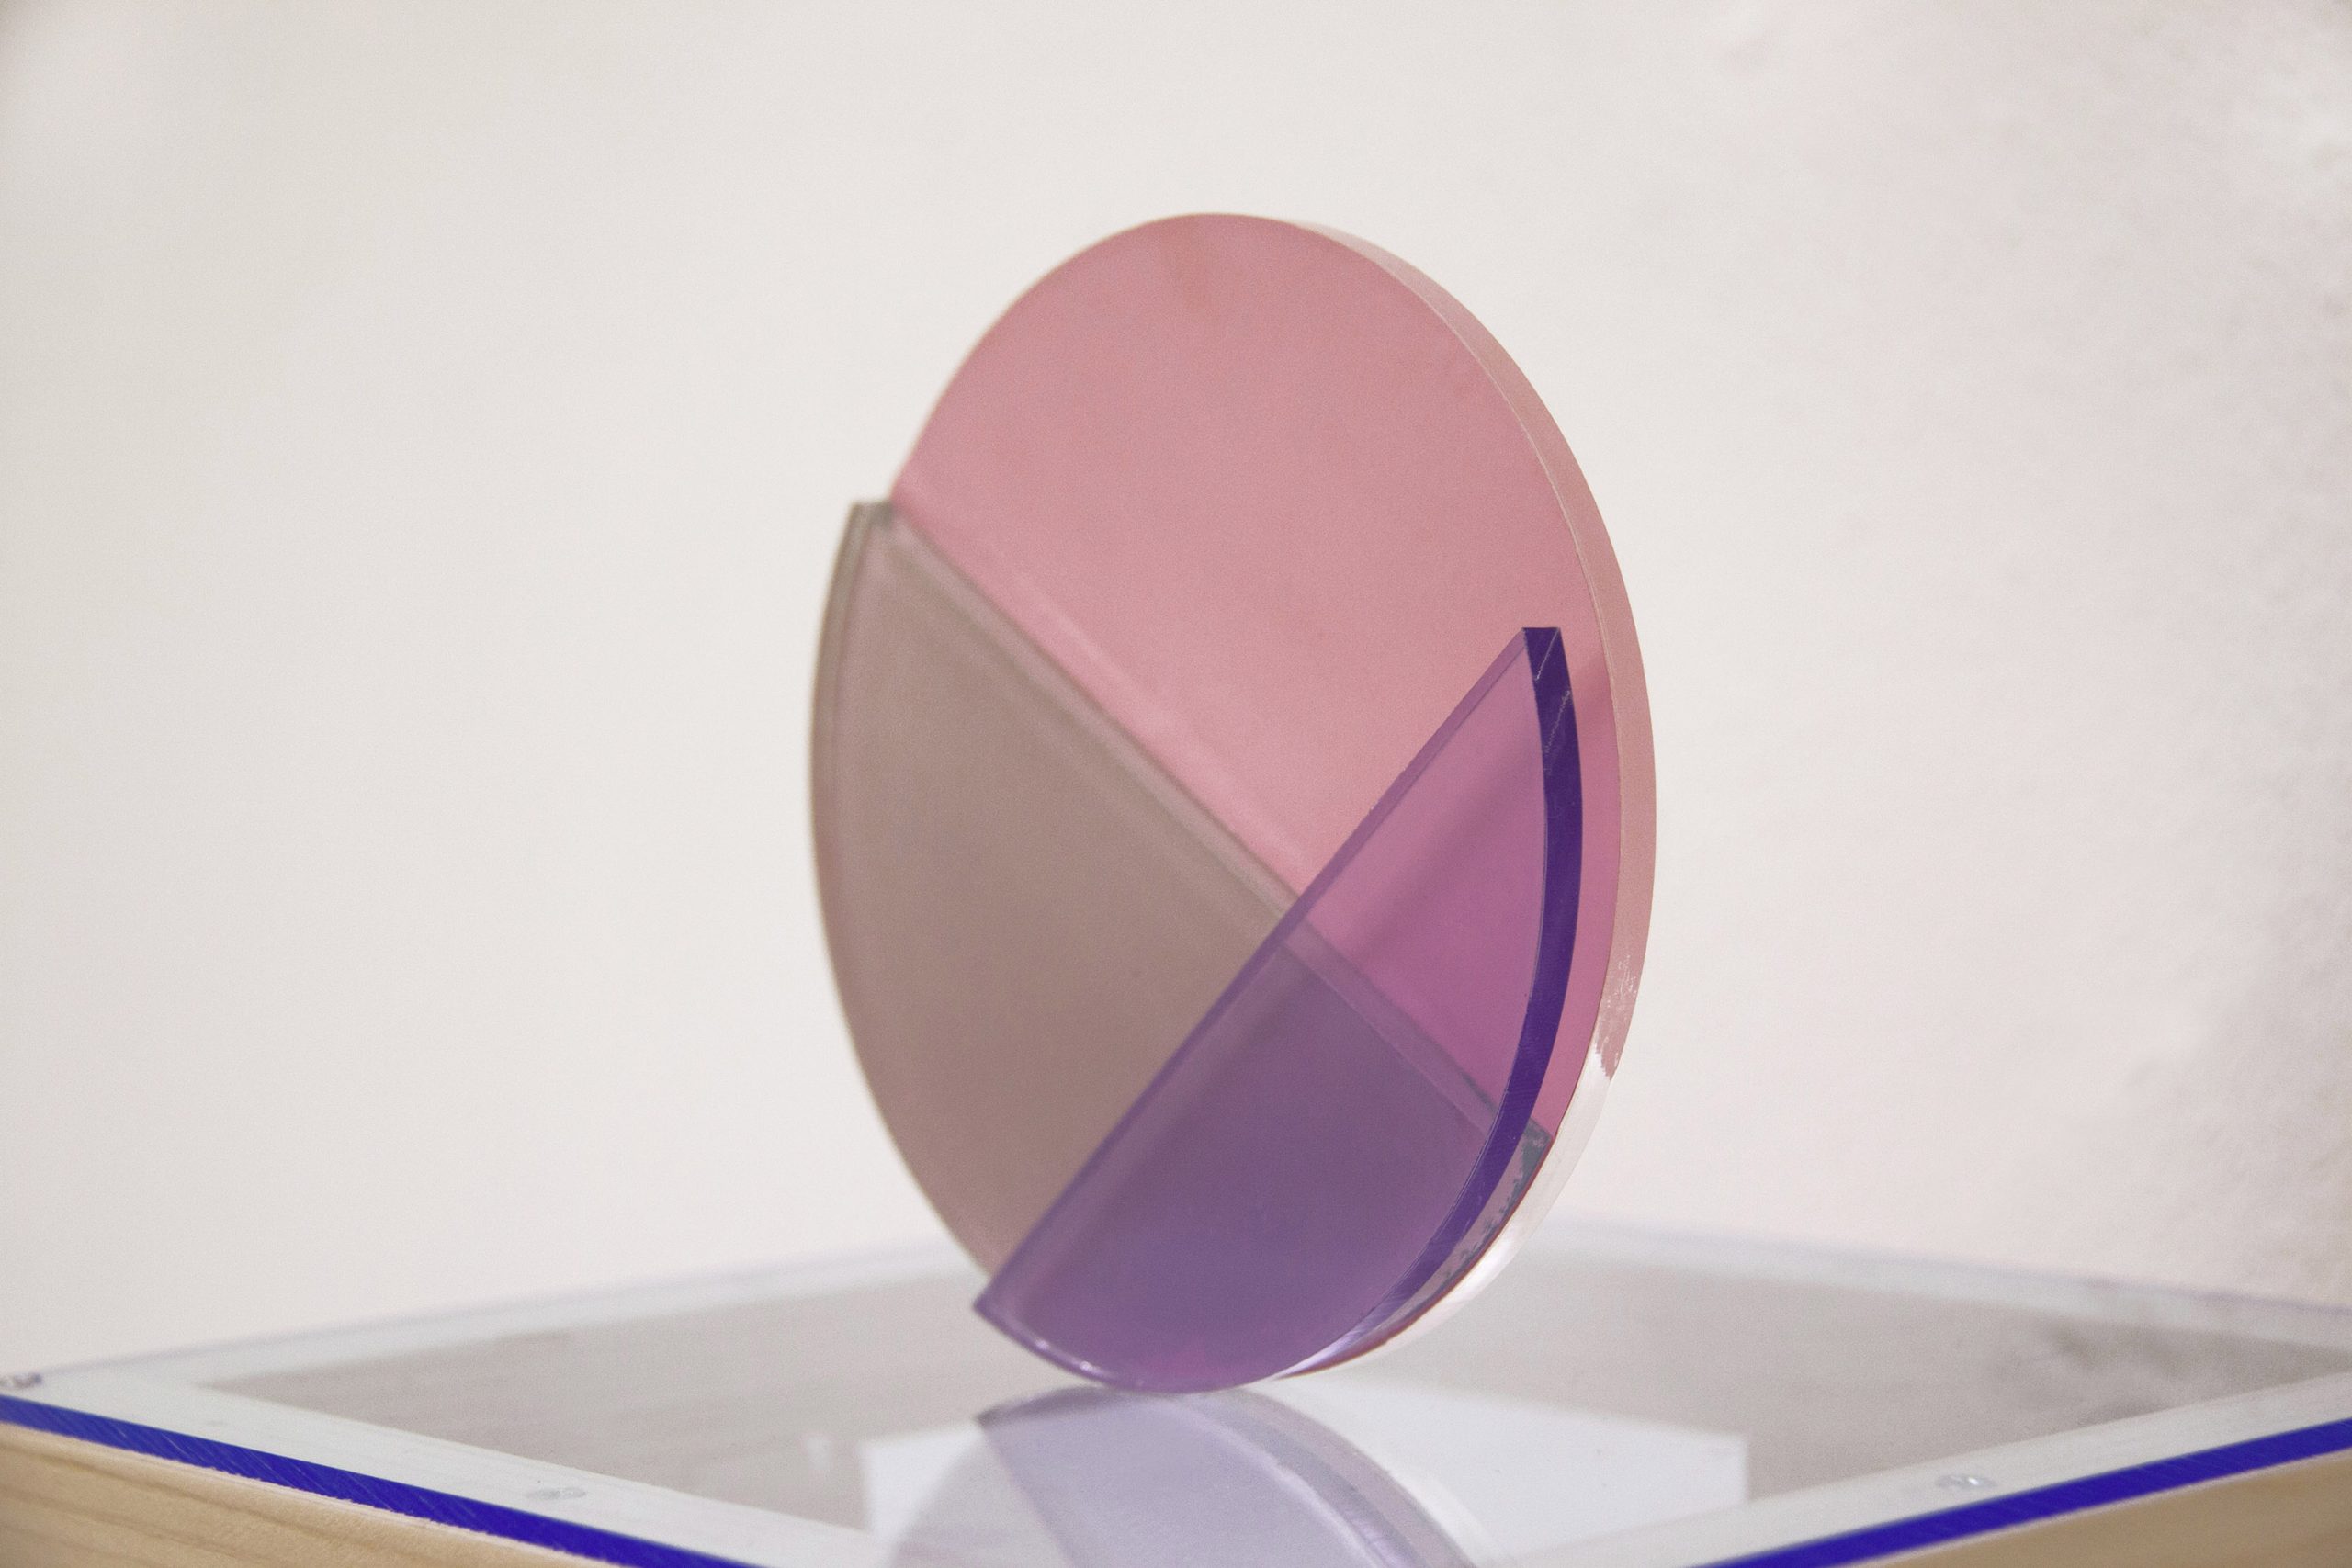 Giulia Fumagalli, “Cerchi di cielo - nana”, 2019, plexiglass, adhesive film, 12,5 x 12,5 x 1,5 cm